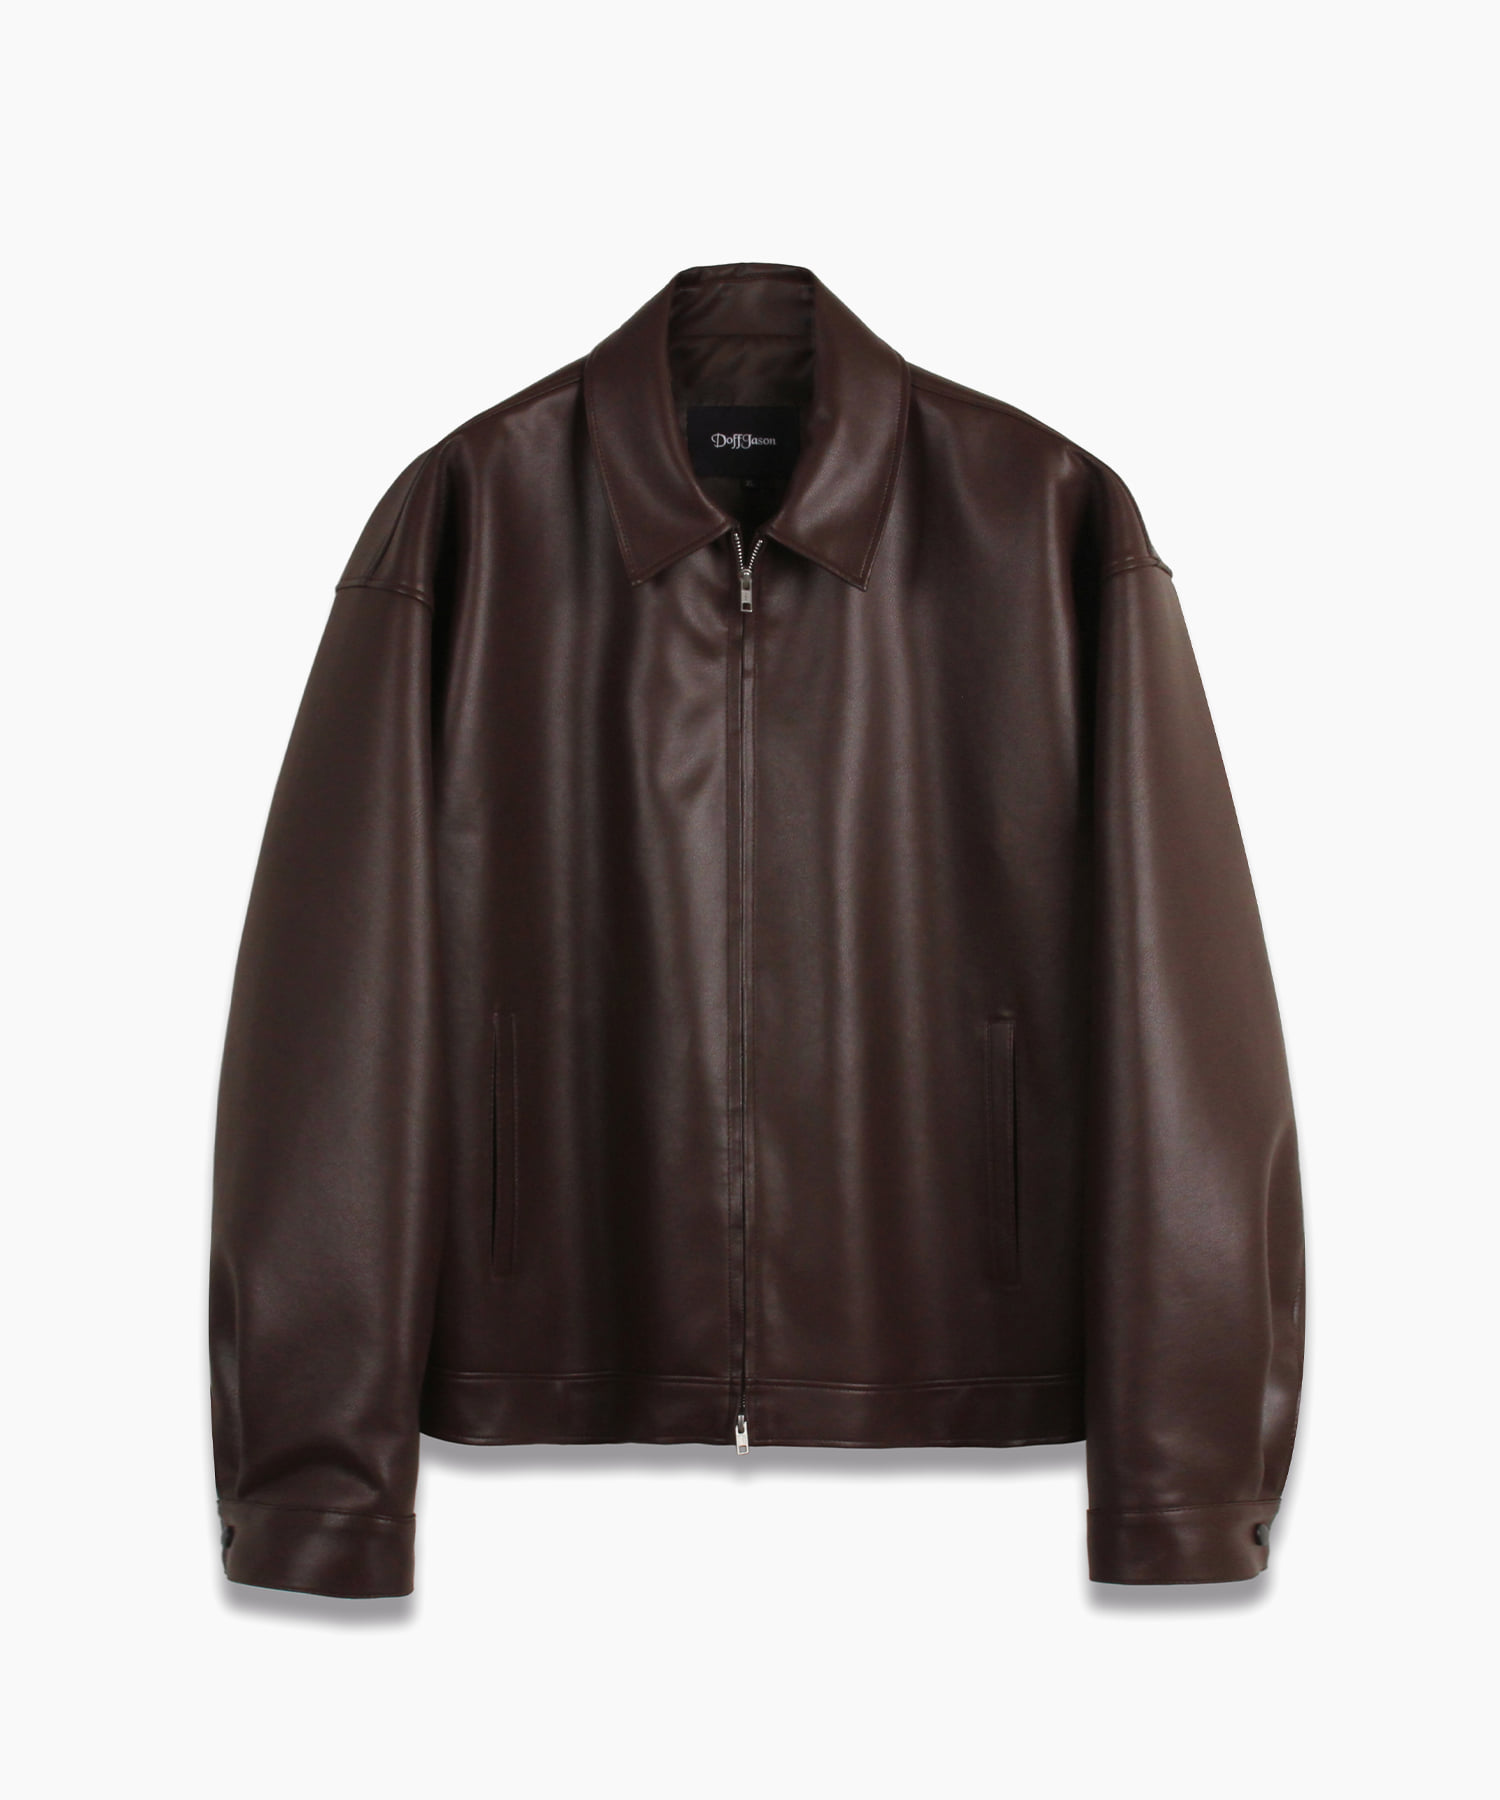 Overfit vegan leather single jacket (brown)